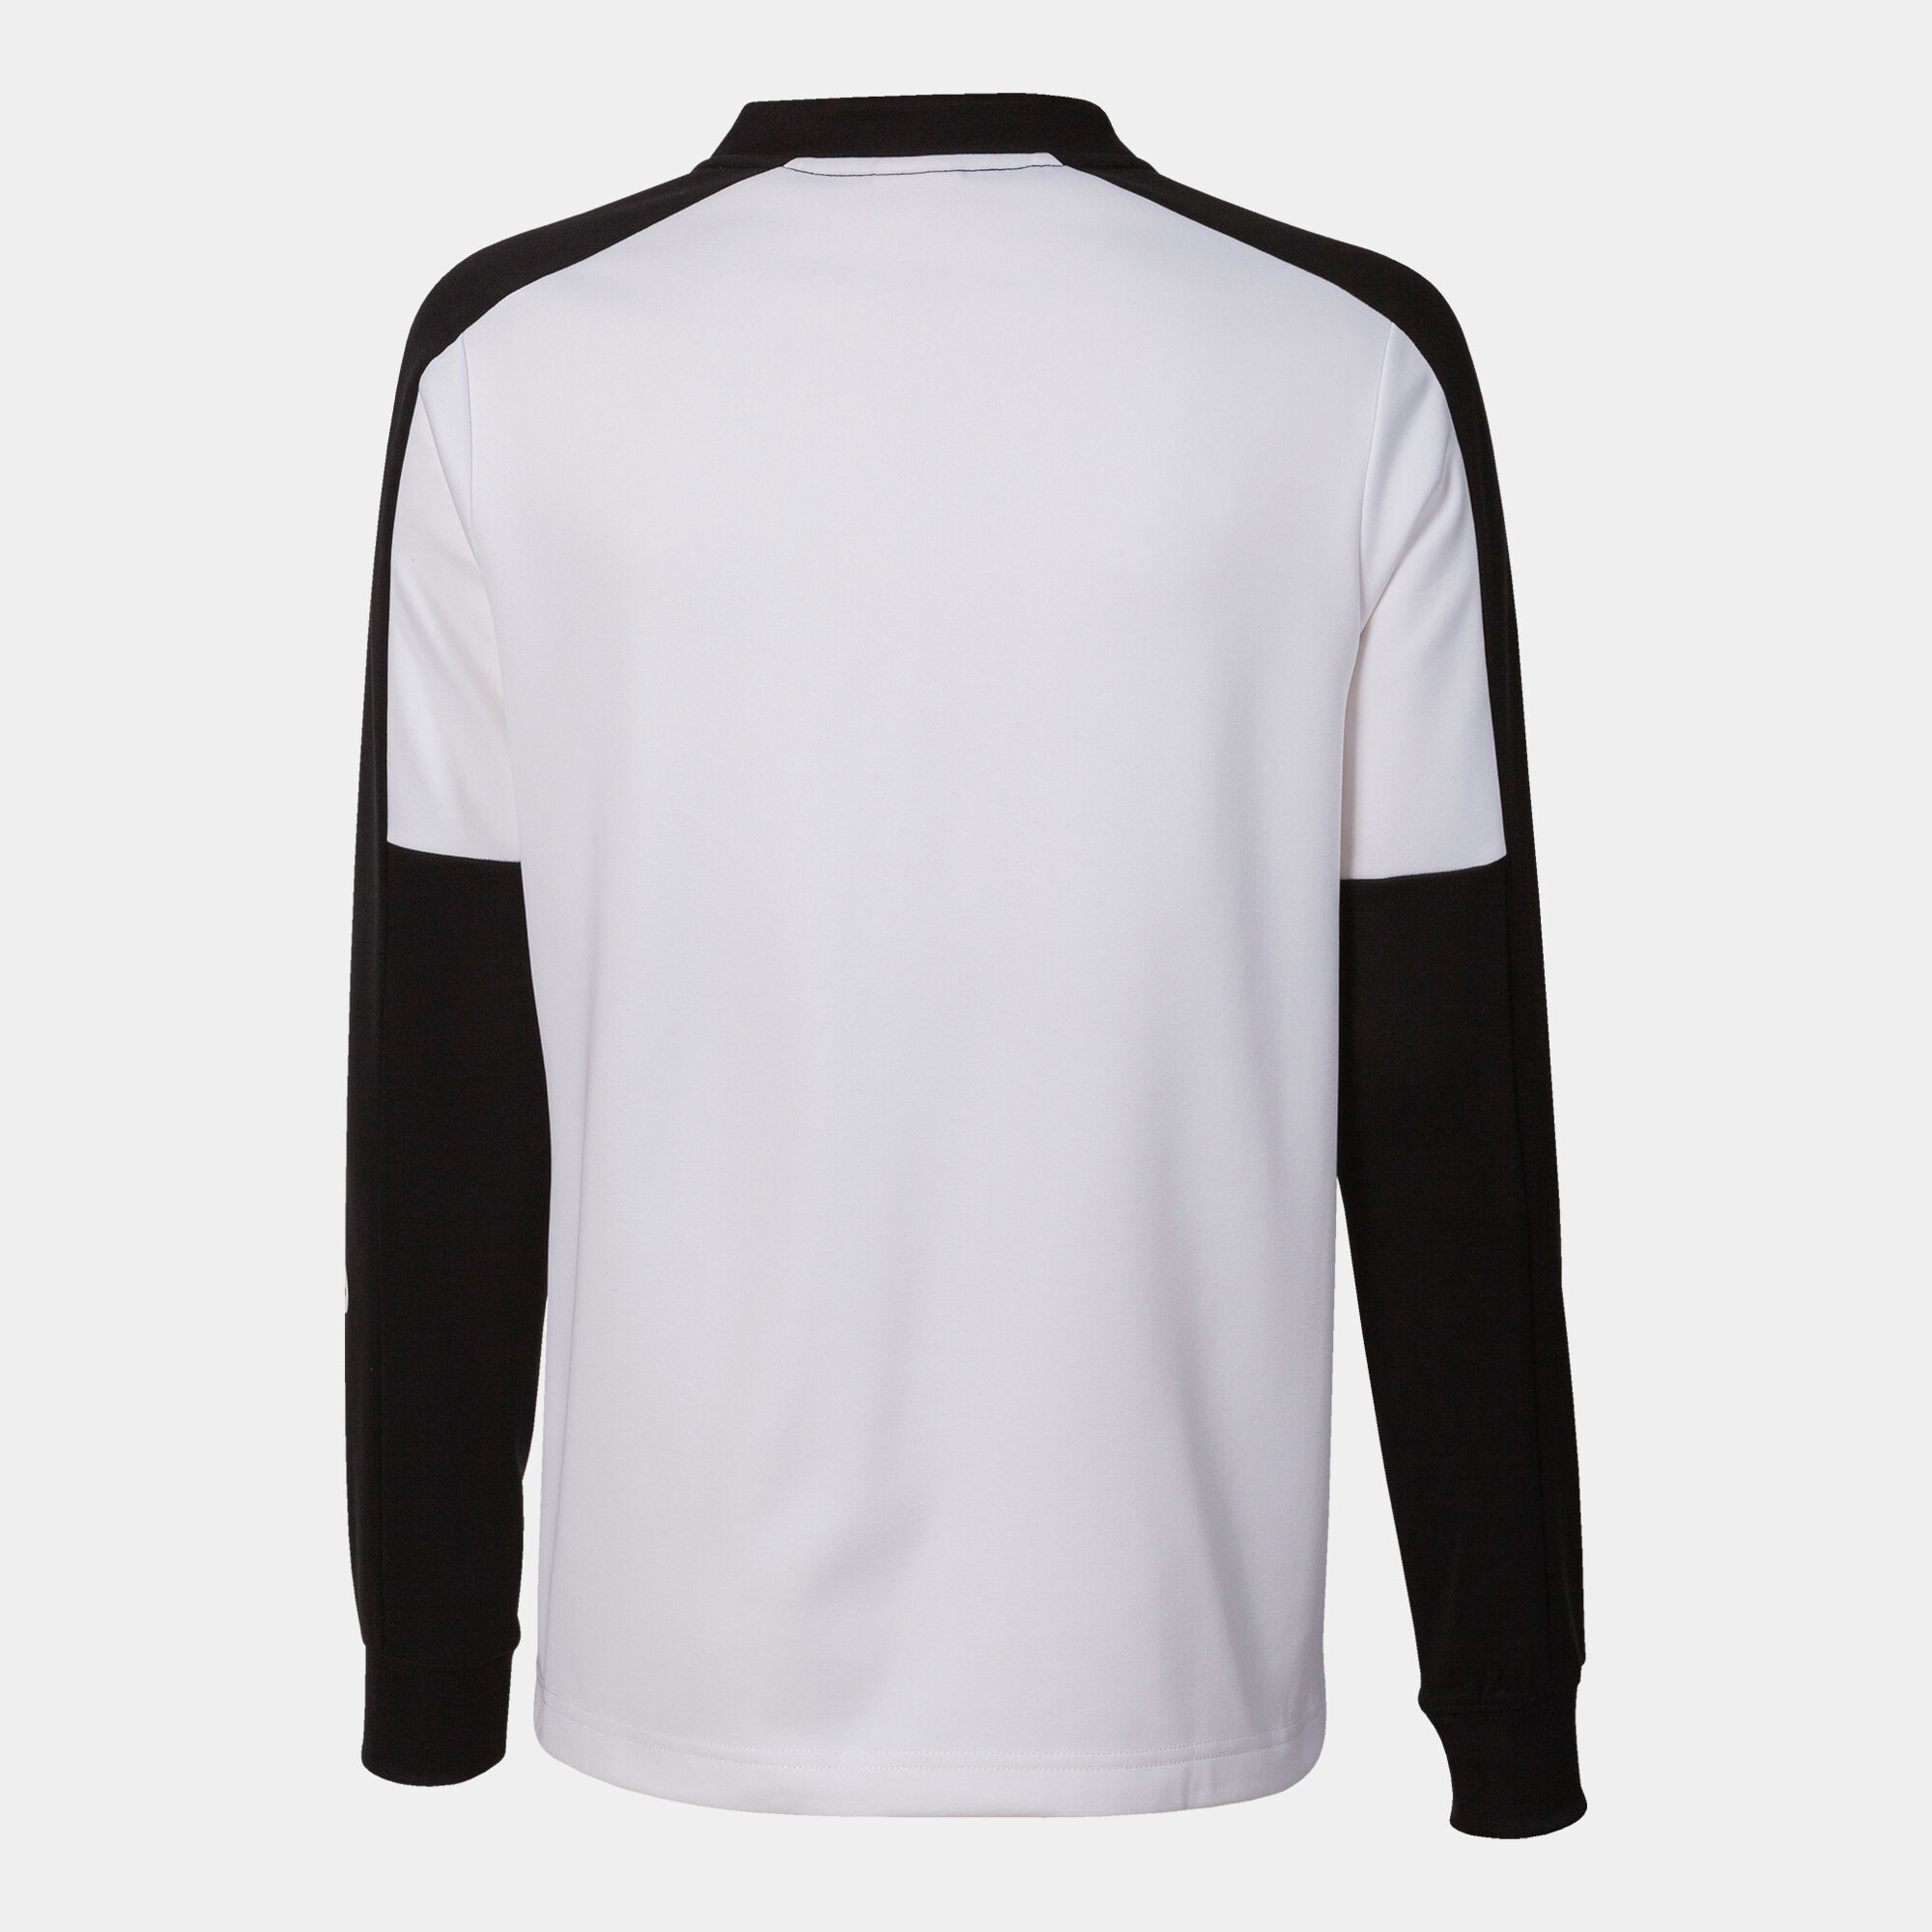 Sweat-shirt femme Eco Championship blanc noir